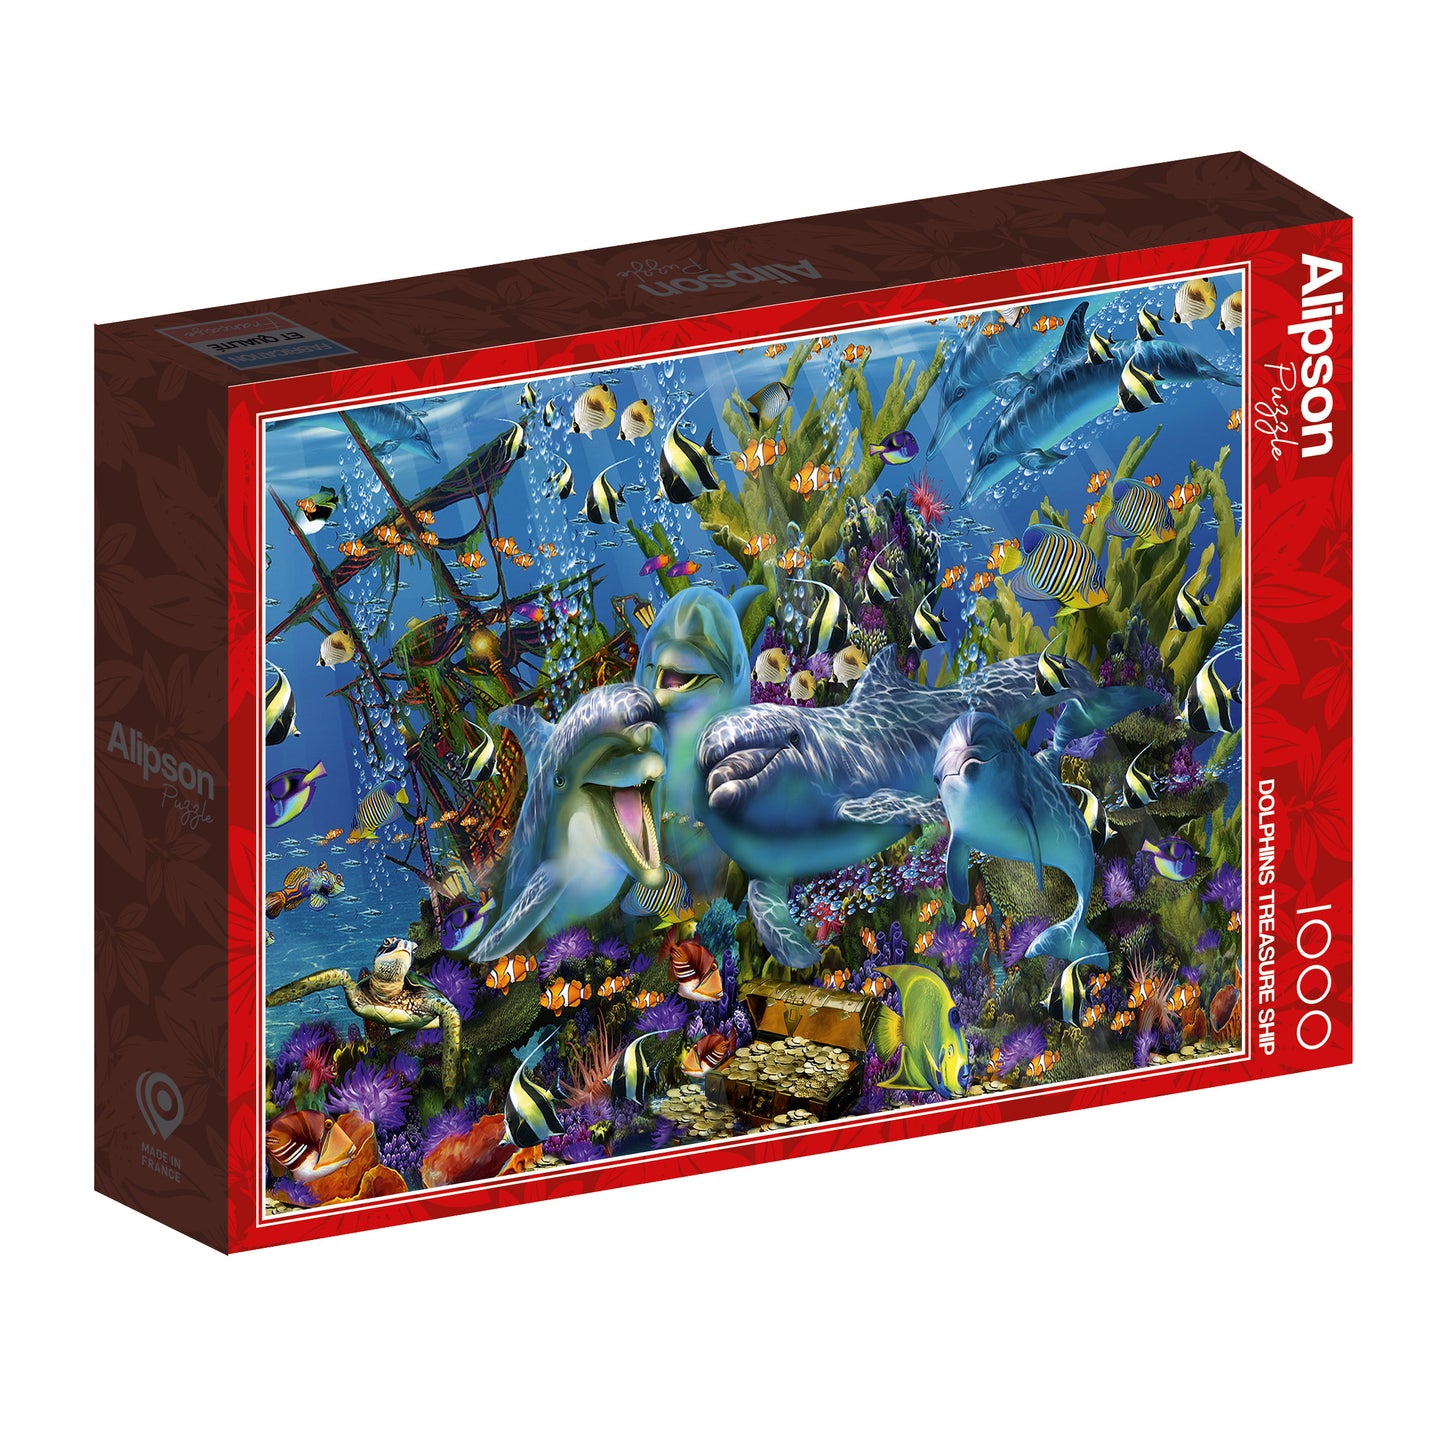 Alipson - Dolphins Treasure Ship - 1000 Piece Jigsaw Puzzle